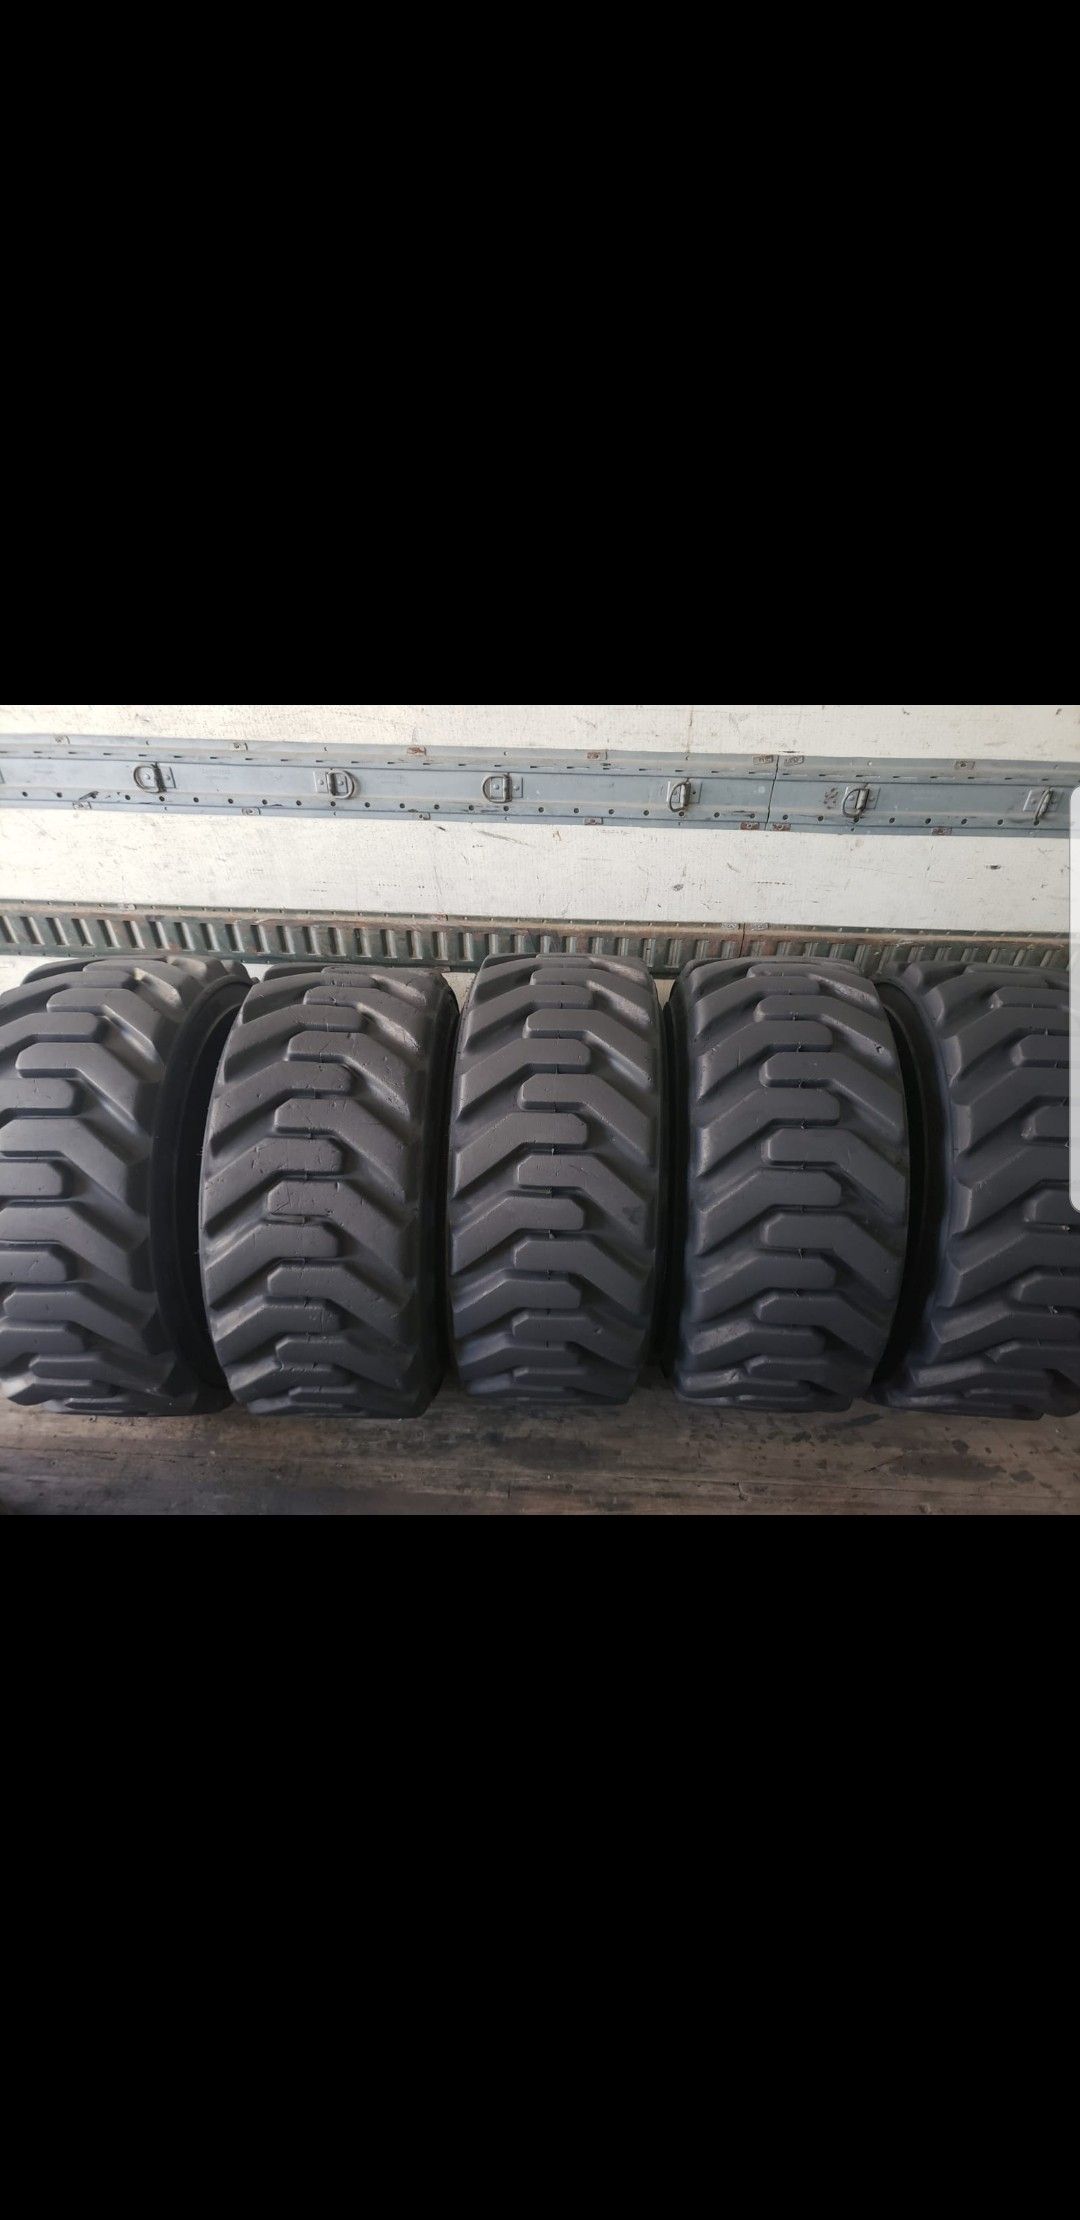 Bobcat tires 12 x 16.5 used